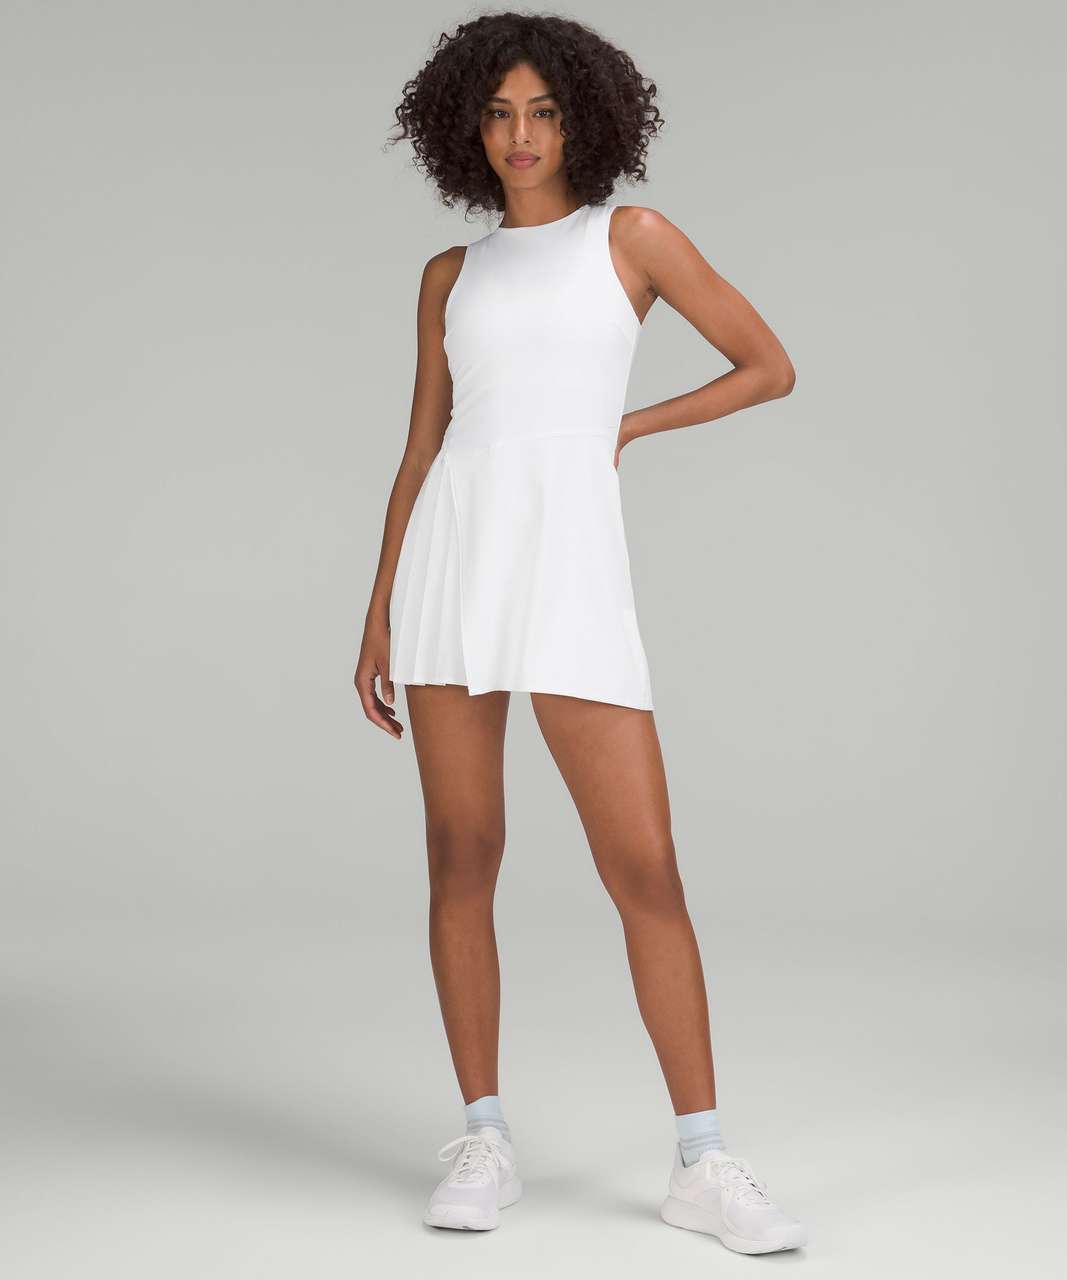 https://storage.googleapis.com/lulu-fanatics/product/82988/1280/lululemon-nulux-asymmetrical-tennis-dress-white-0002-440864.jpg